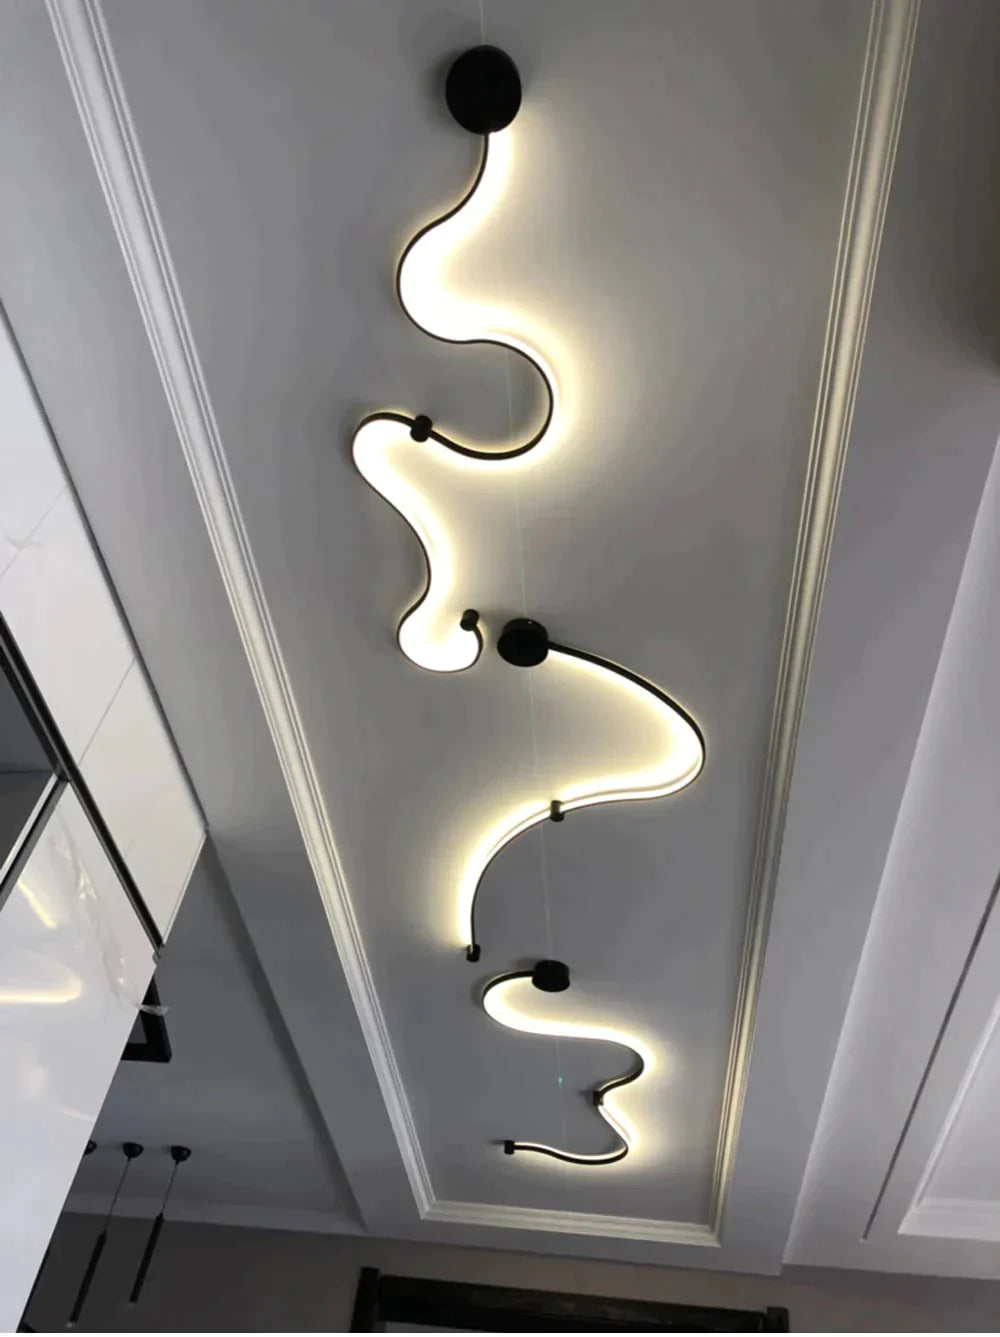 Mounted Modern Led Ceiling Lights For Living Room Bedroom Aisle Fixture Indoor Home Decorative Led